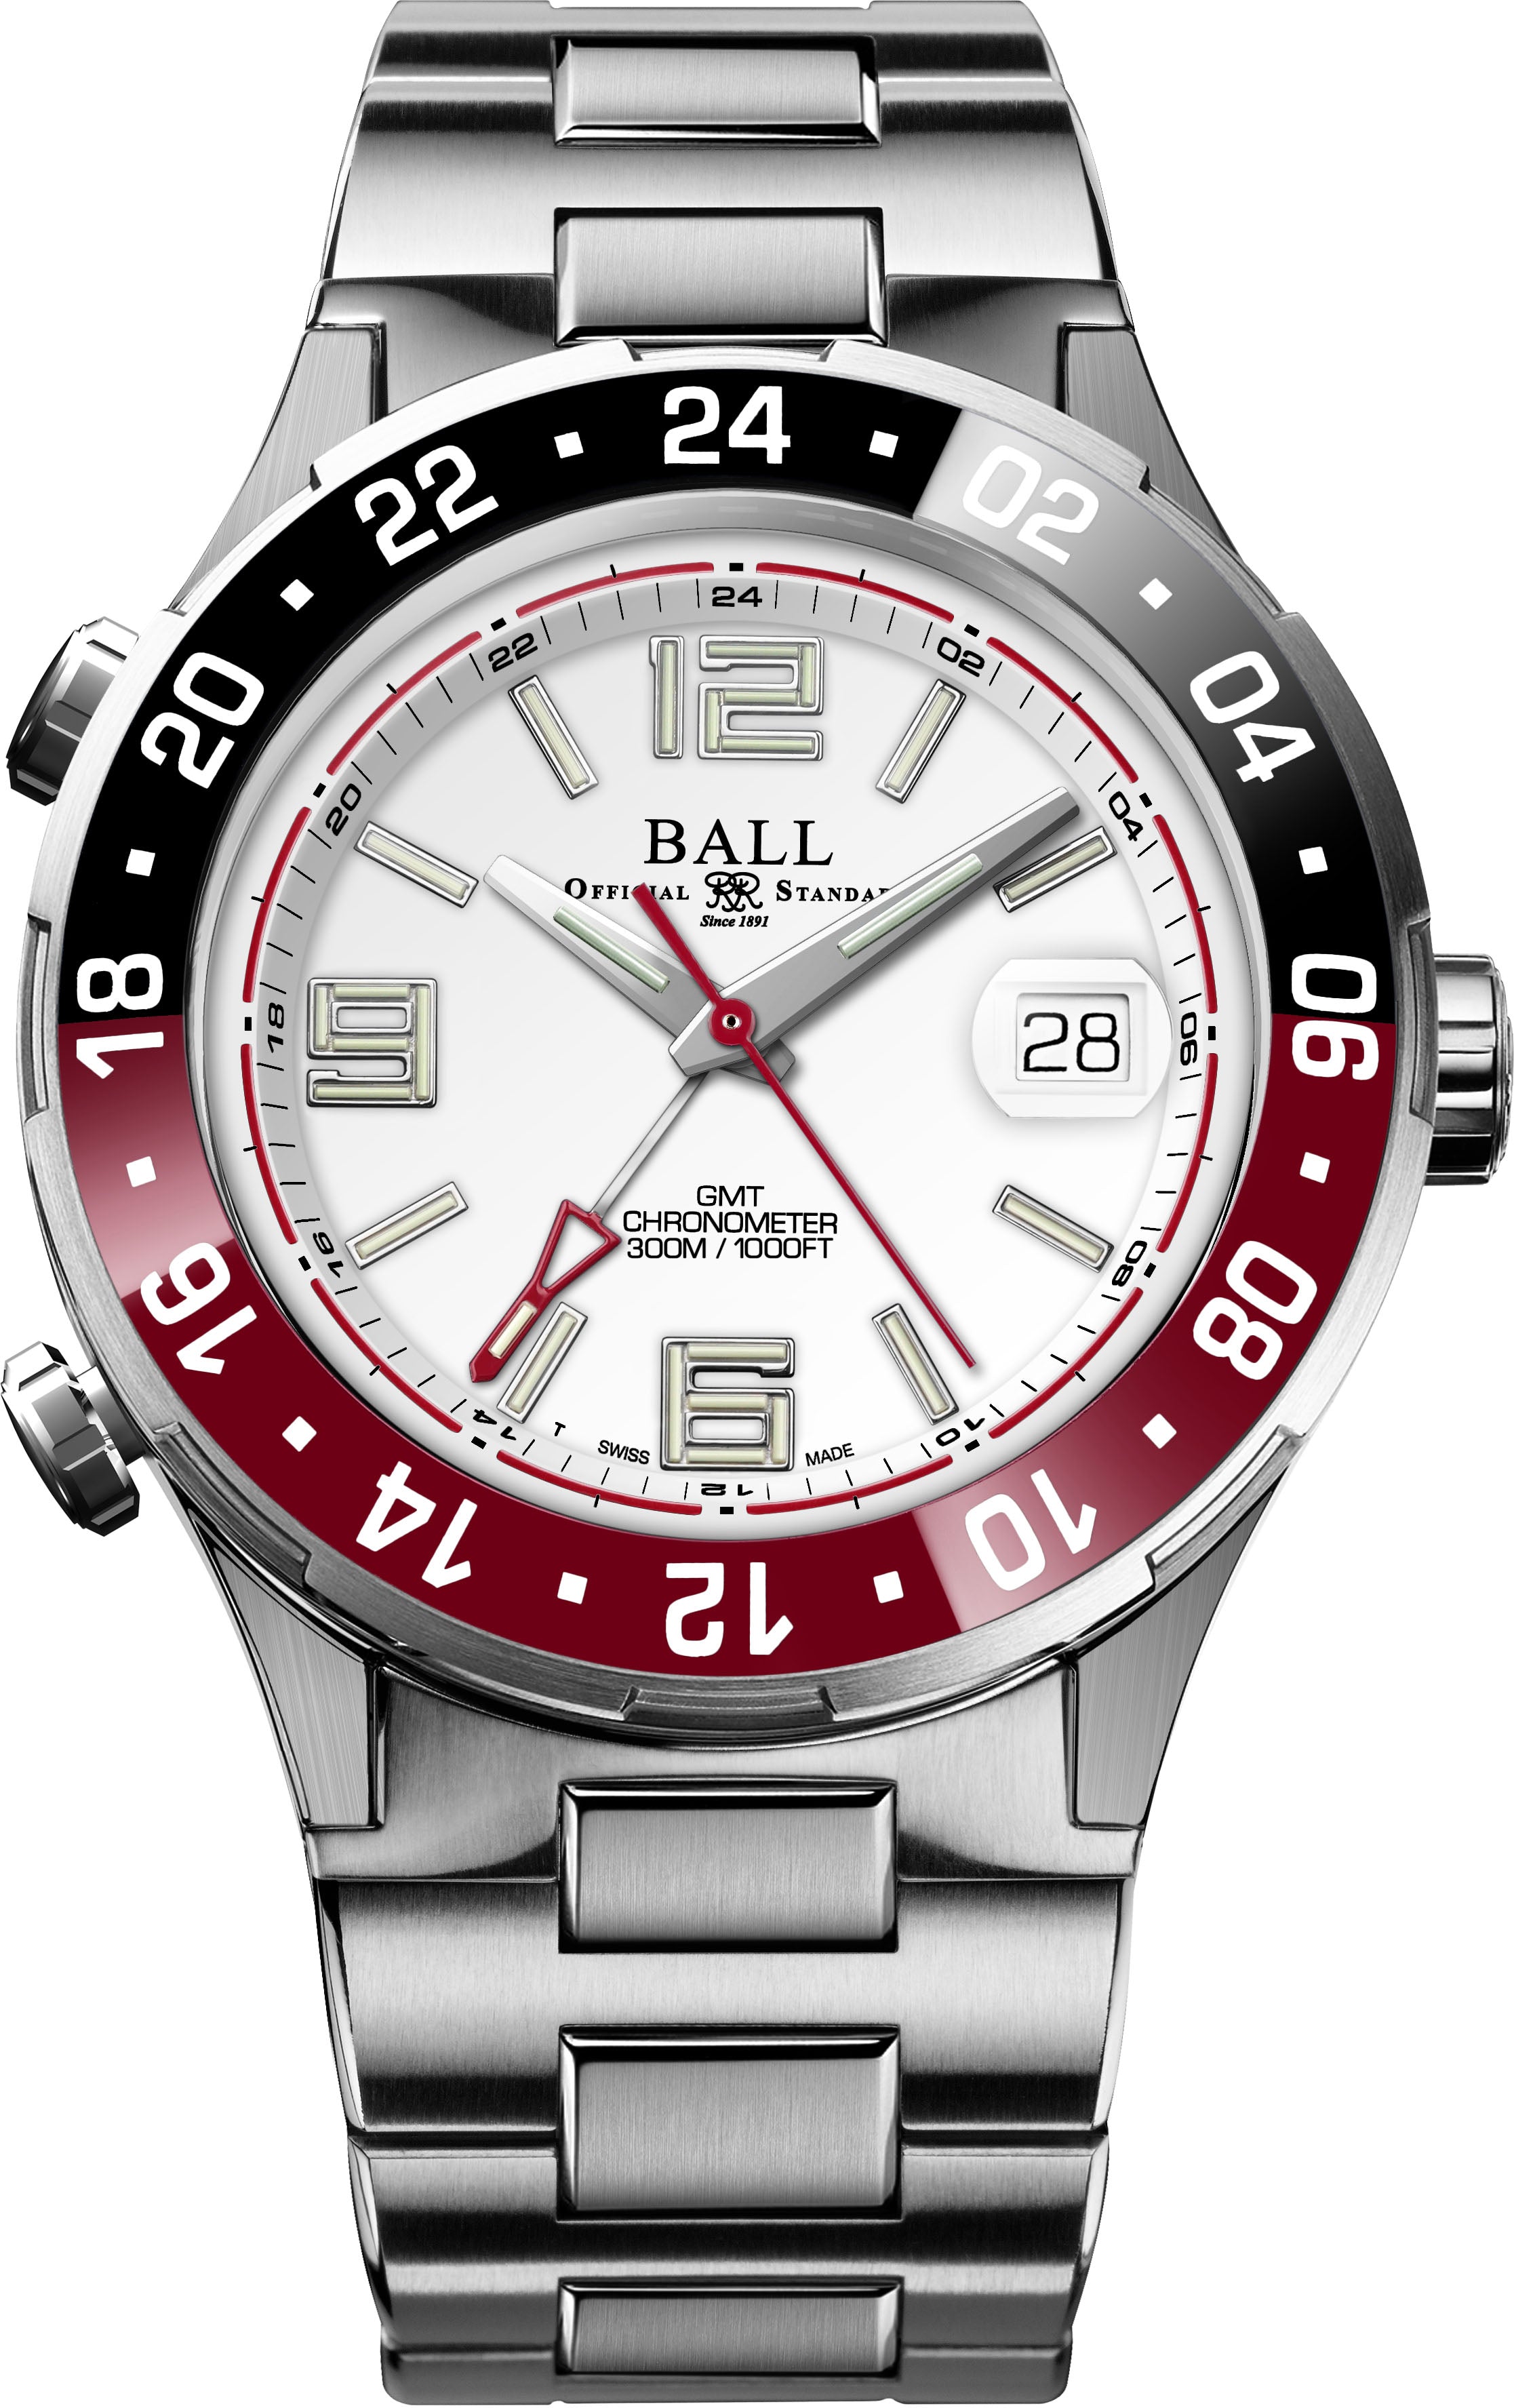 Photos - Wrist Watch Ball Watch Company Roadmaster Pilot GMT Limited Edition - White BL-2333 